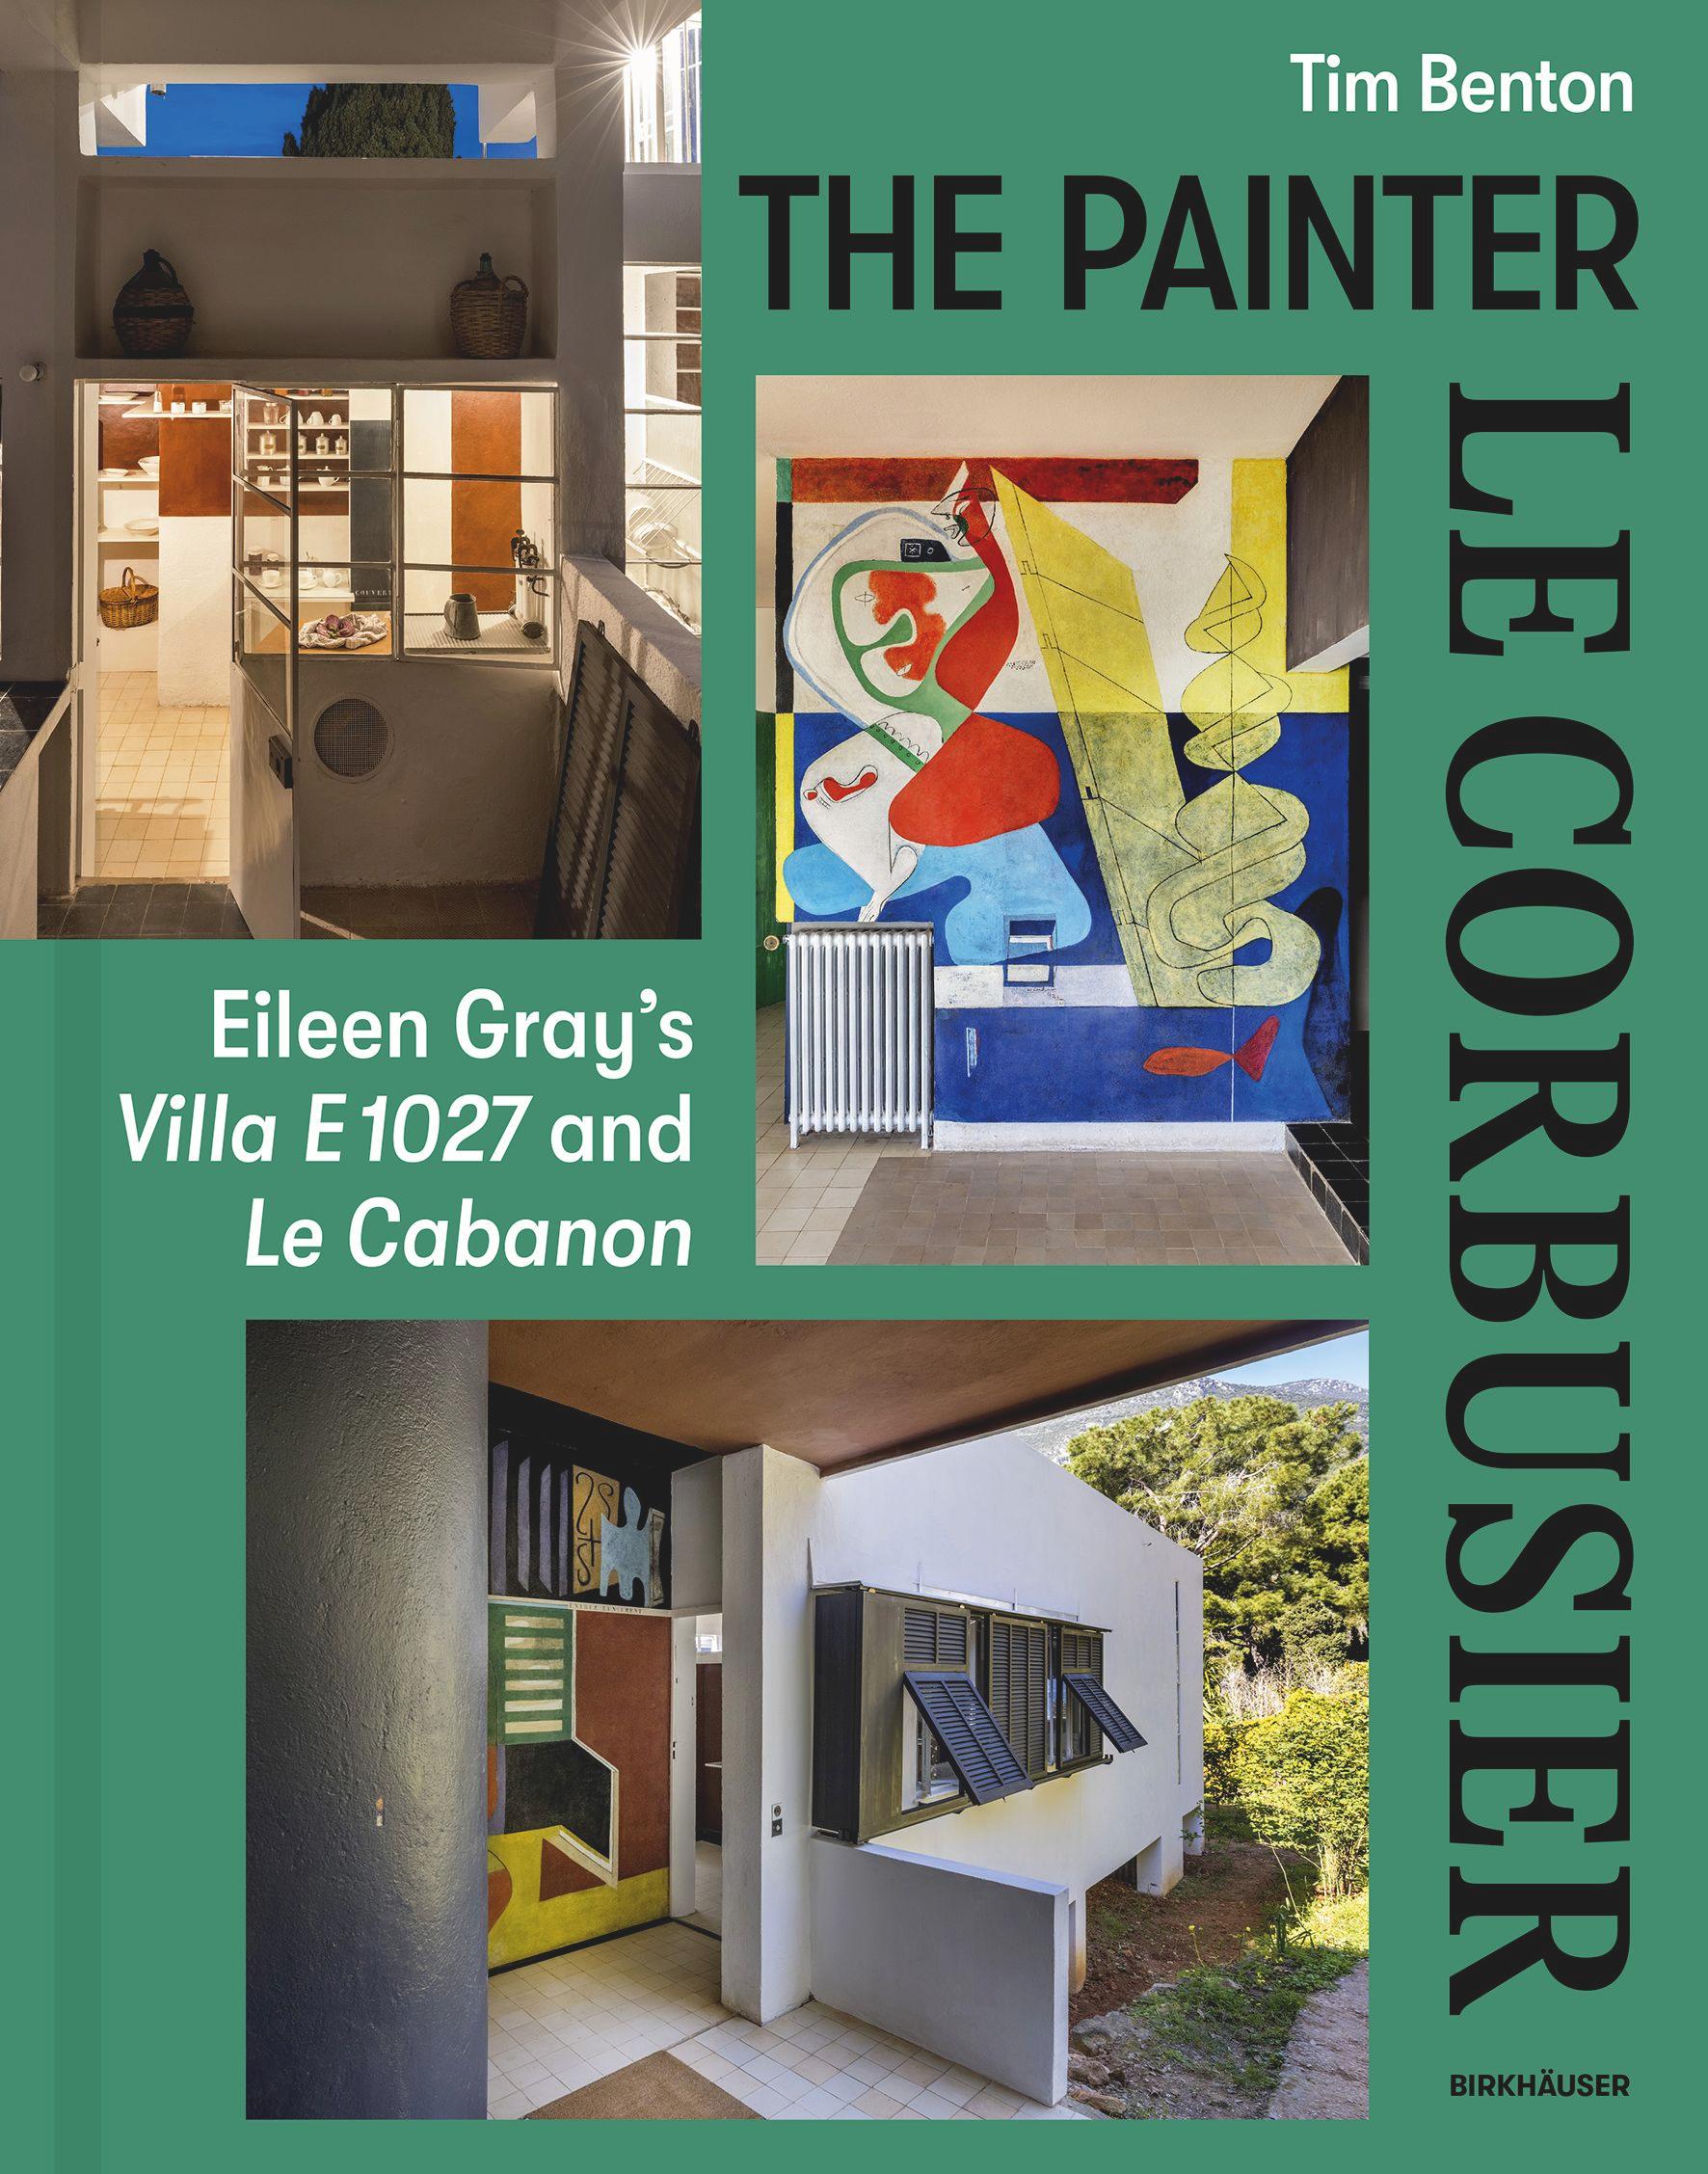 The Painter Le Corbusier's cover